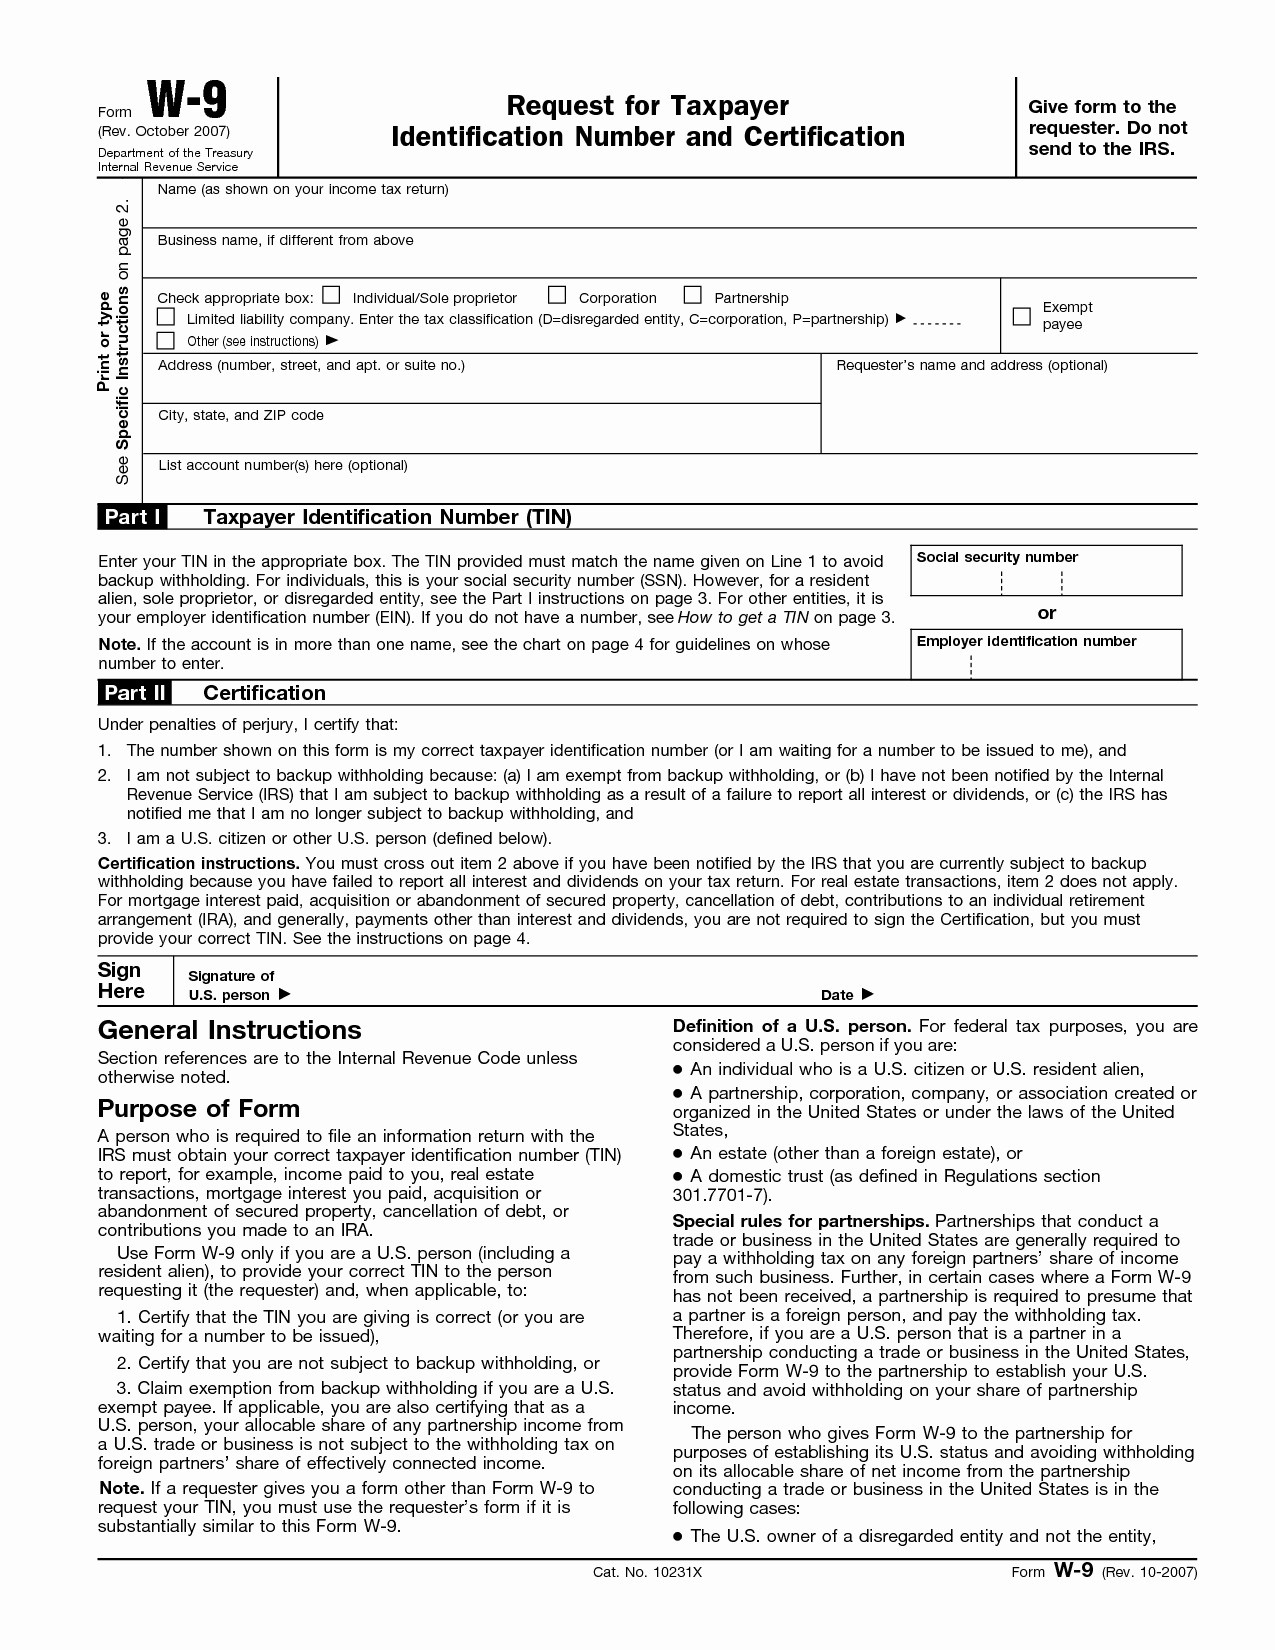 Form W9 Wikipedia W9 Free Printable Form 2016 Free Printable